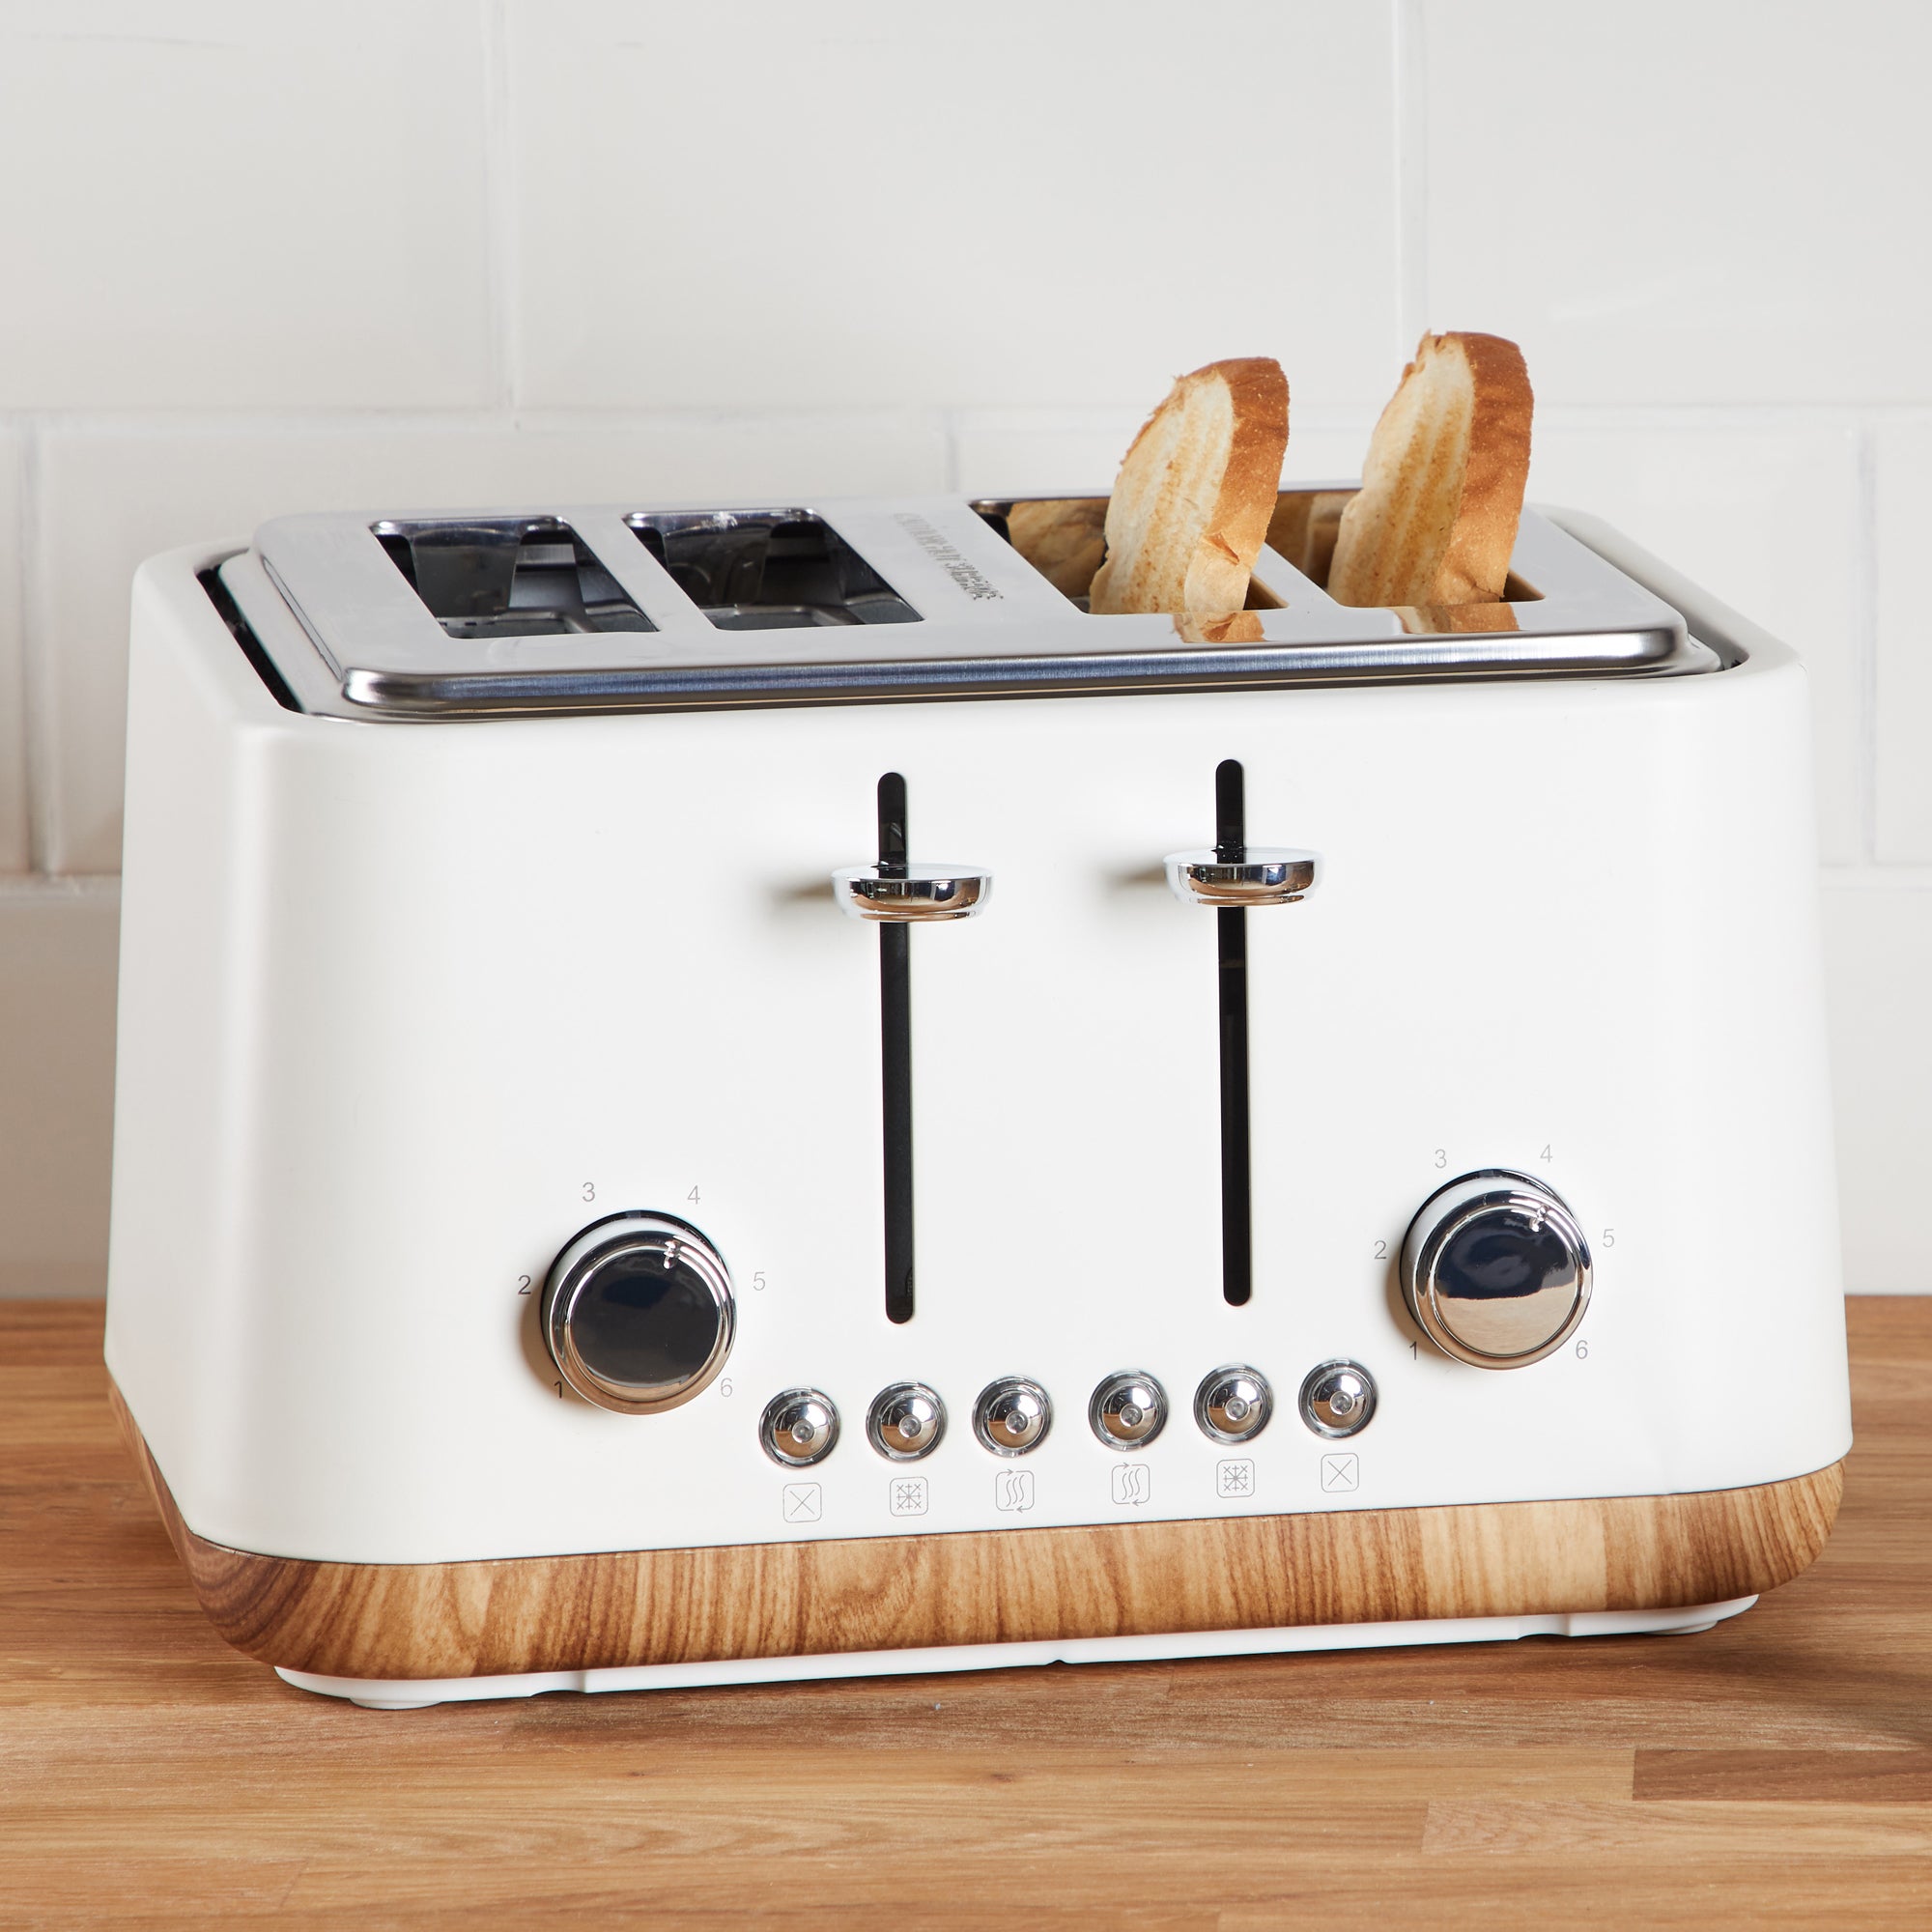 White Toaster - 4 Slice